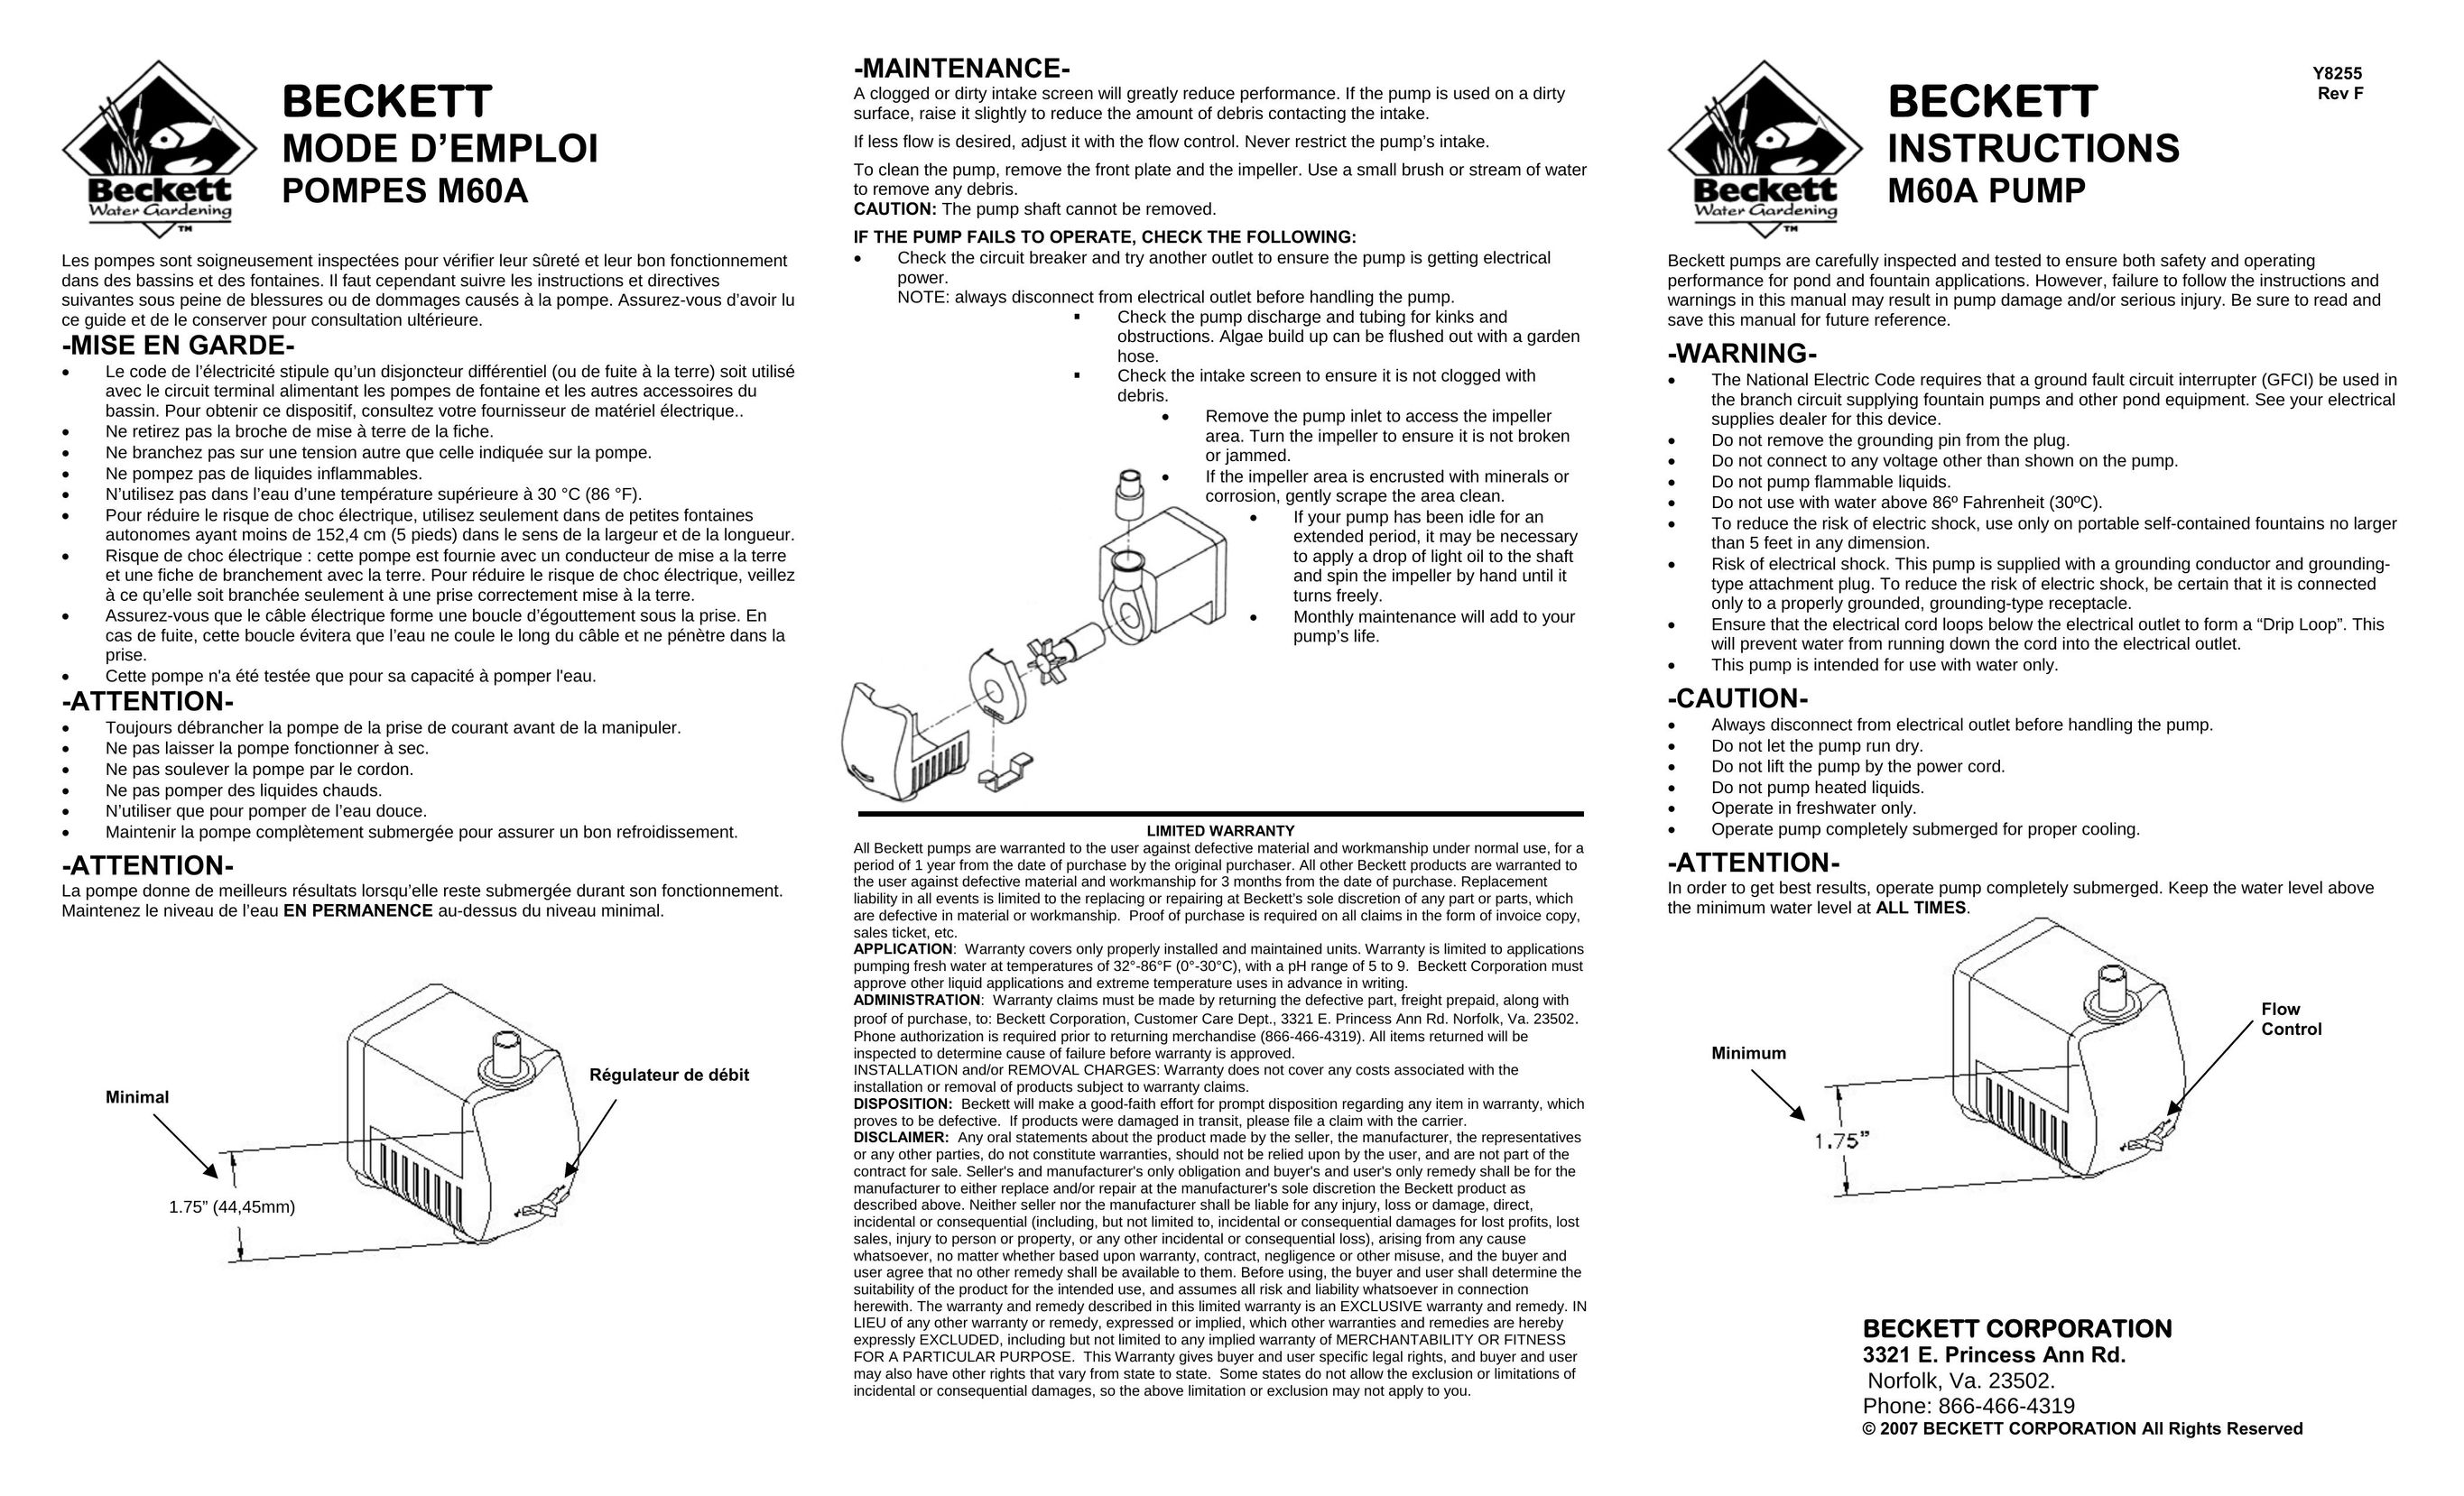 Beckett Water Gardening M60A Plumbing Product User Manual